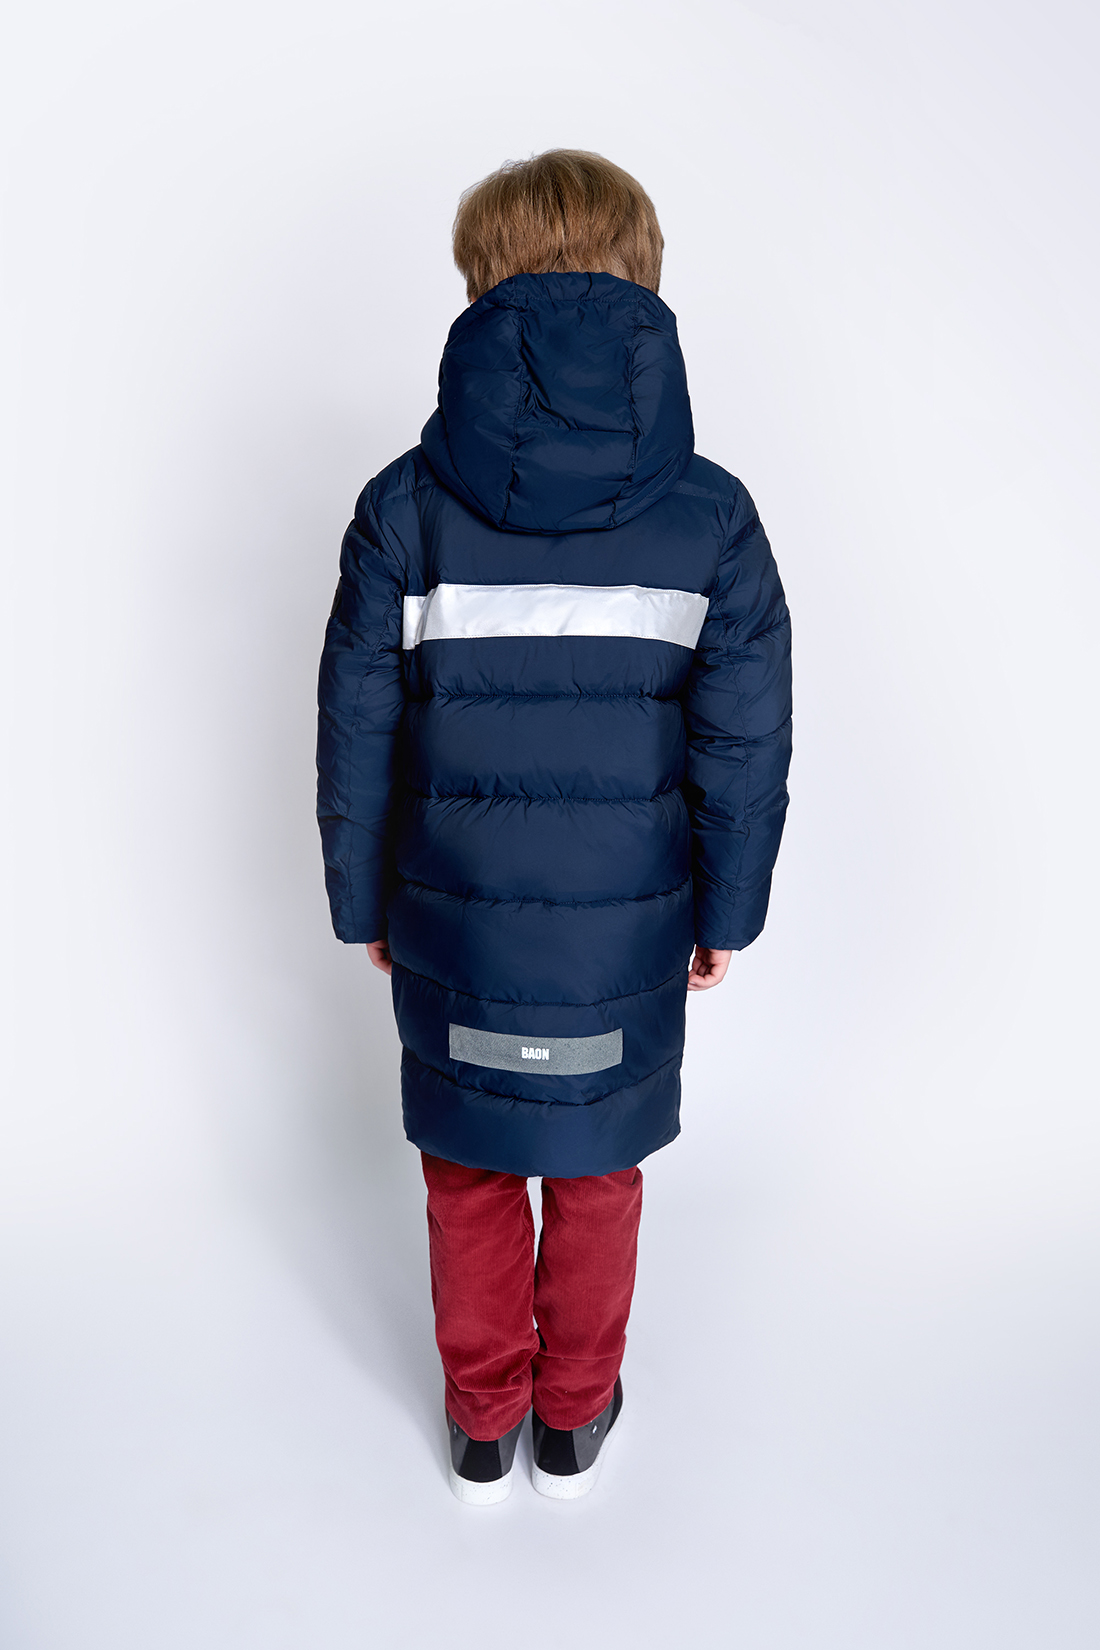 Длинная куртка для мальчика (арт. baon BK539505), размер 110, цвет синий Длинная куртка для мальчика (арт. baon BK539505) - фото 2